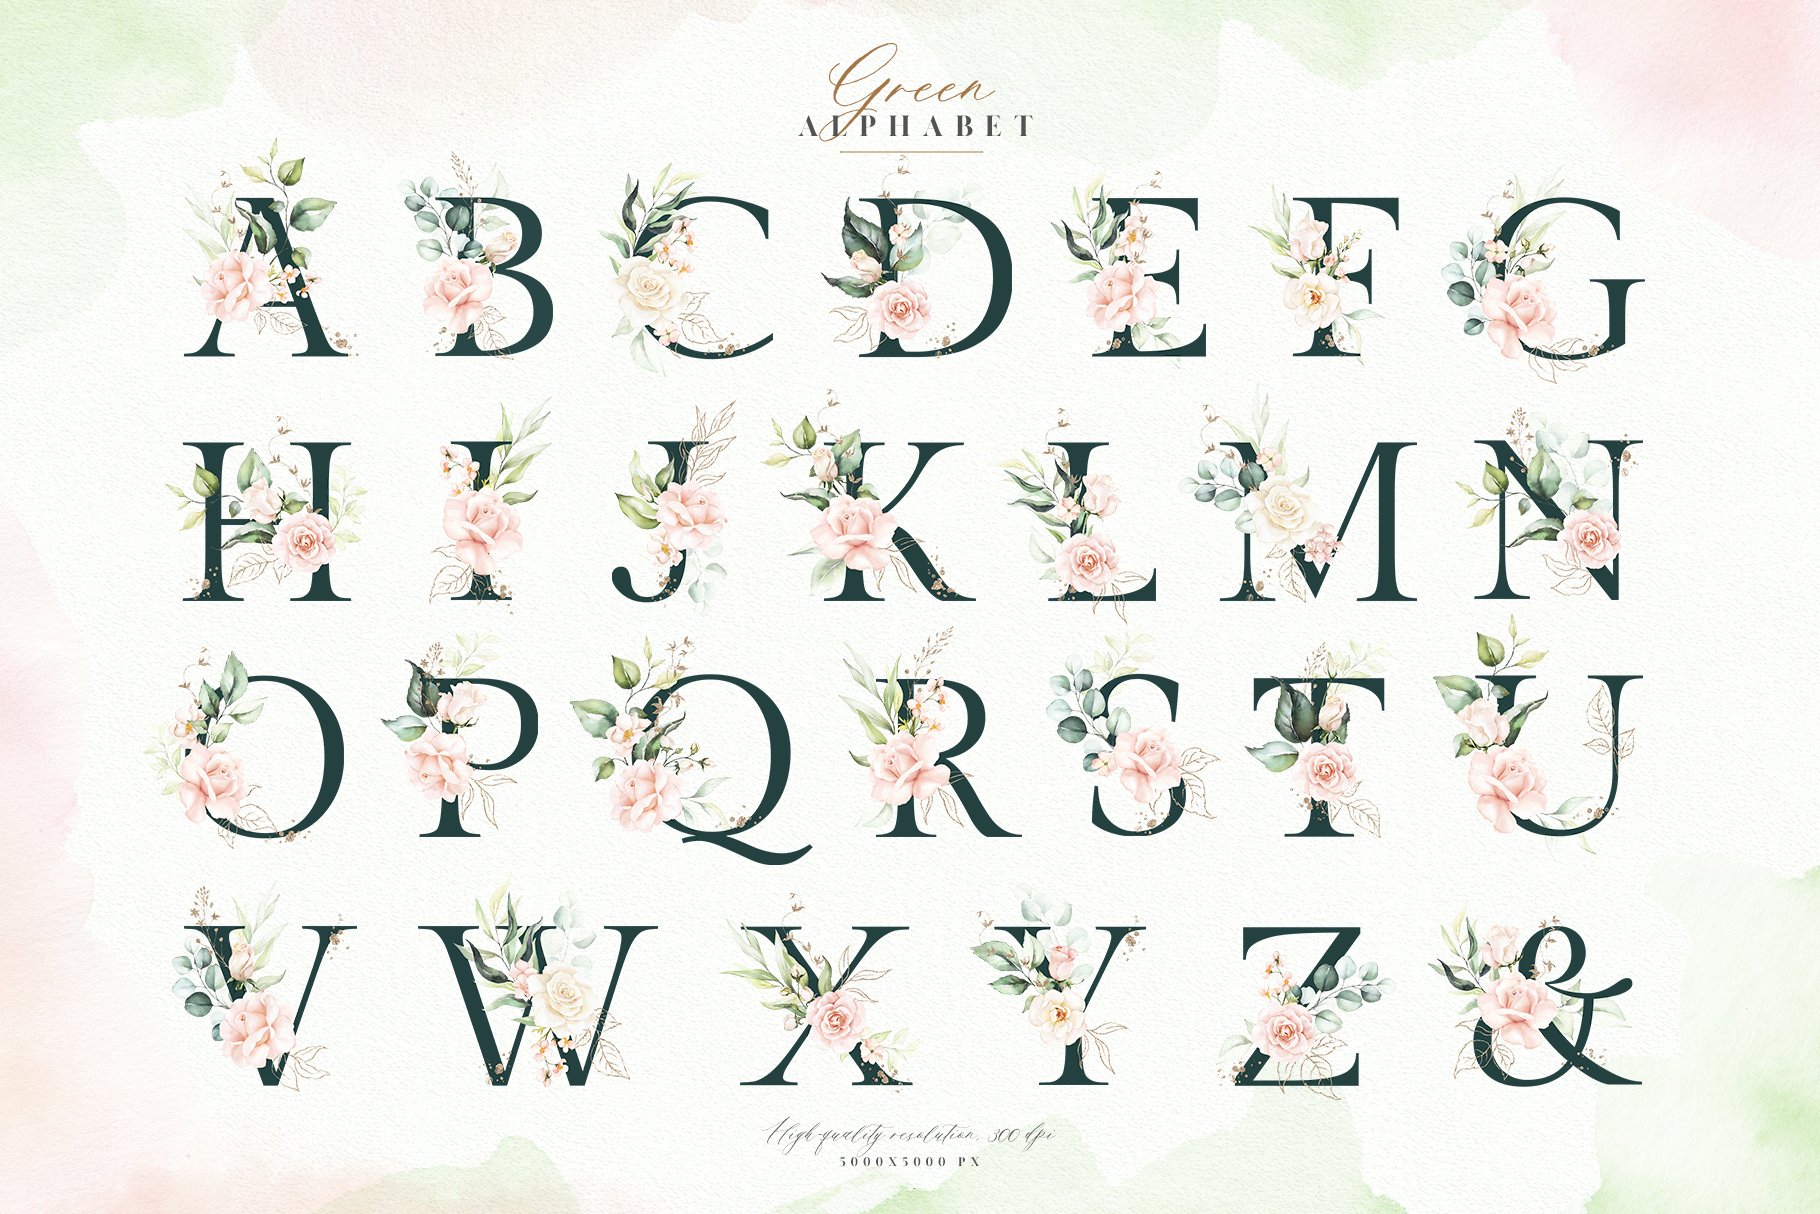 Ver Novum - Watercolor Blush Spring Floral Alphabet - Design Cuts